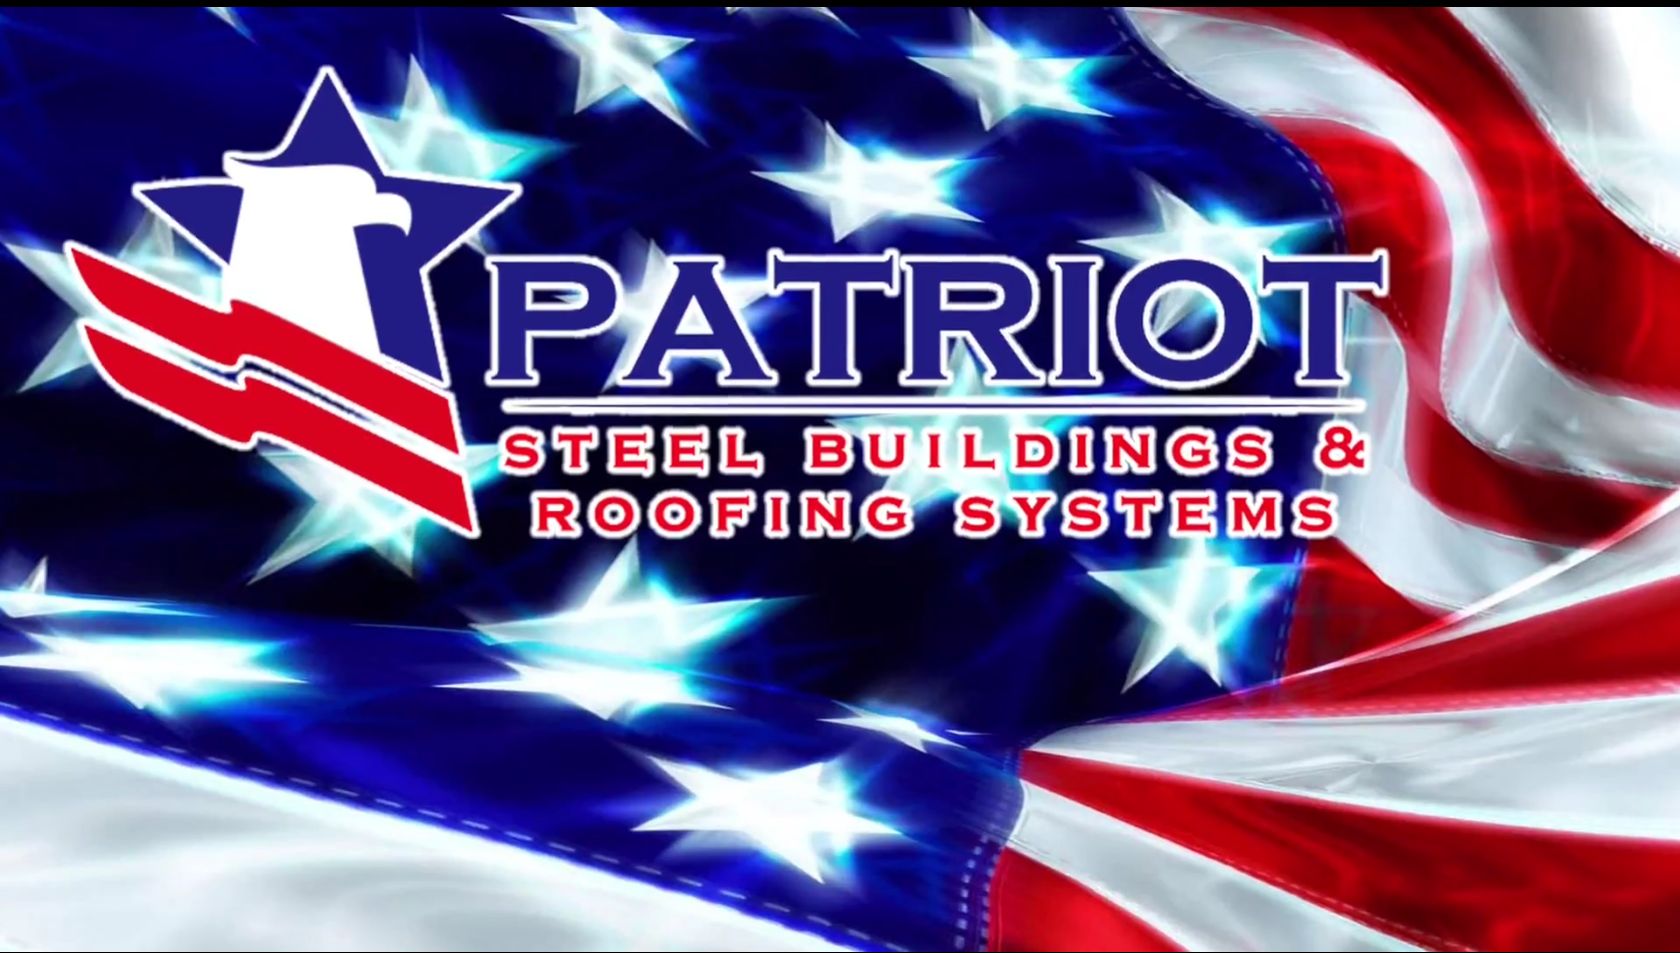 Todd Spicer chief officer of Patriot Steel Buildings LLC